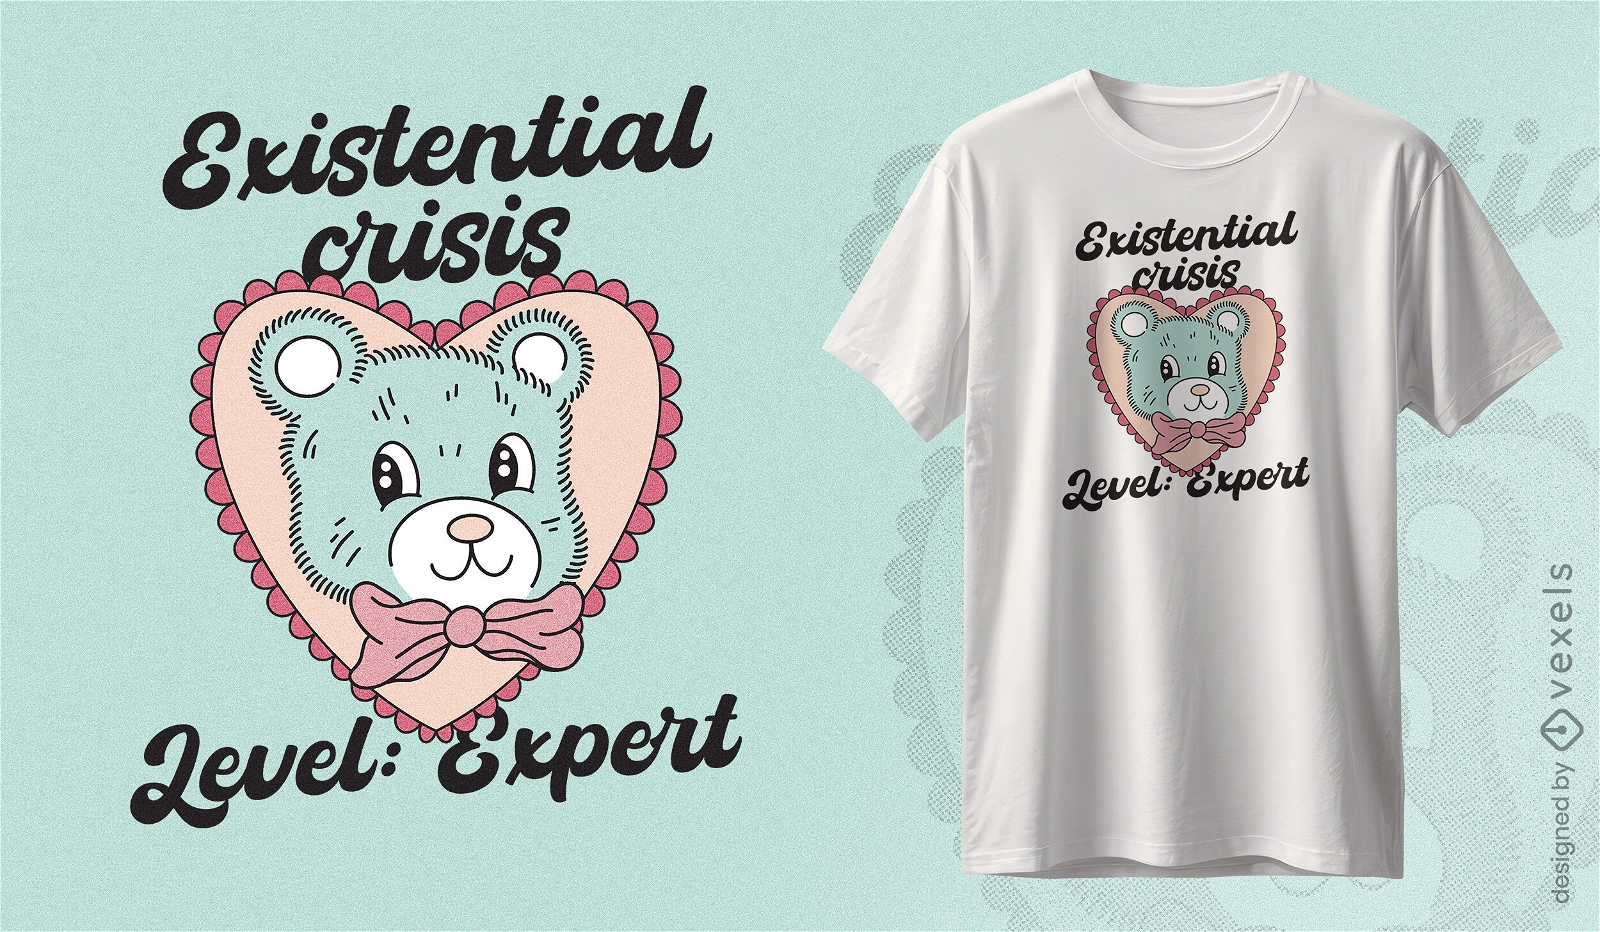 Existential crisis expert level t-shirt design